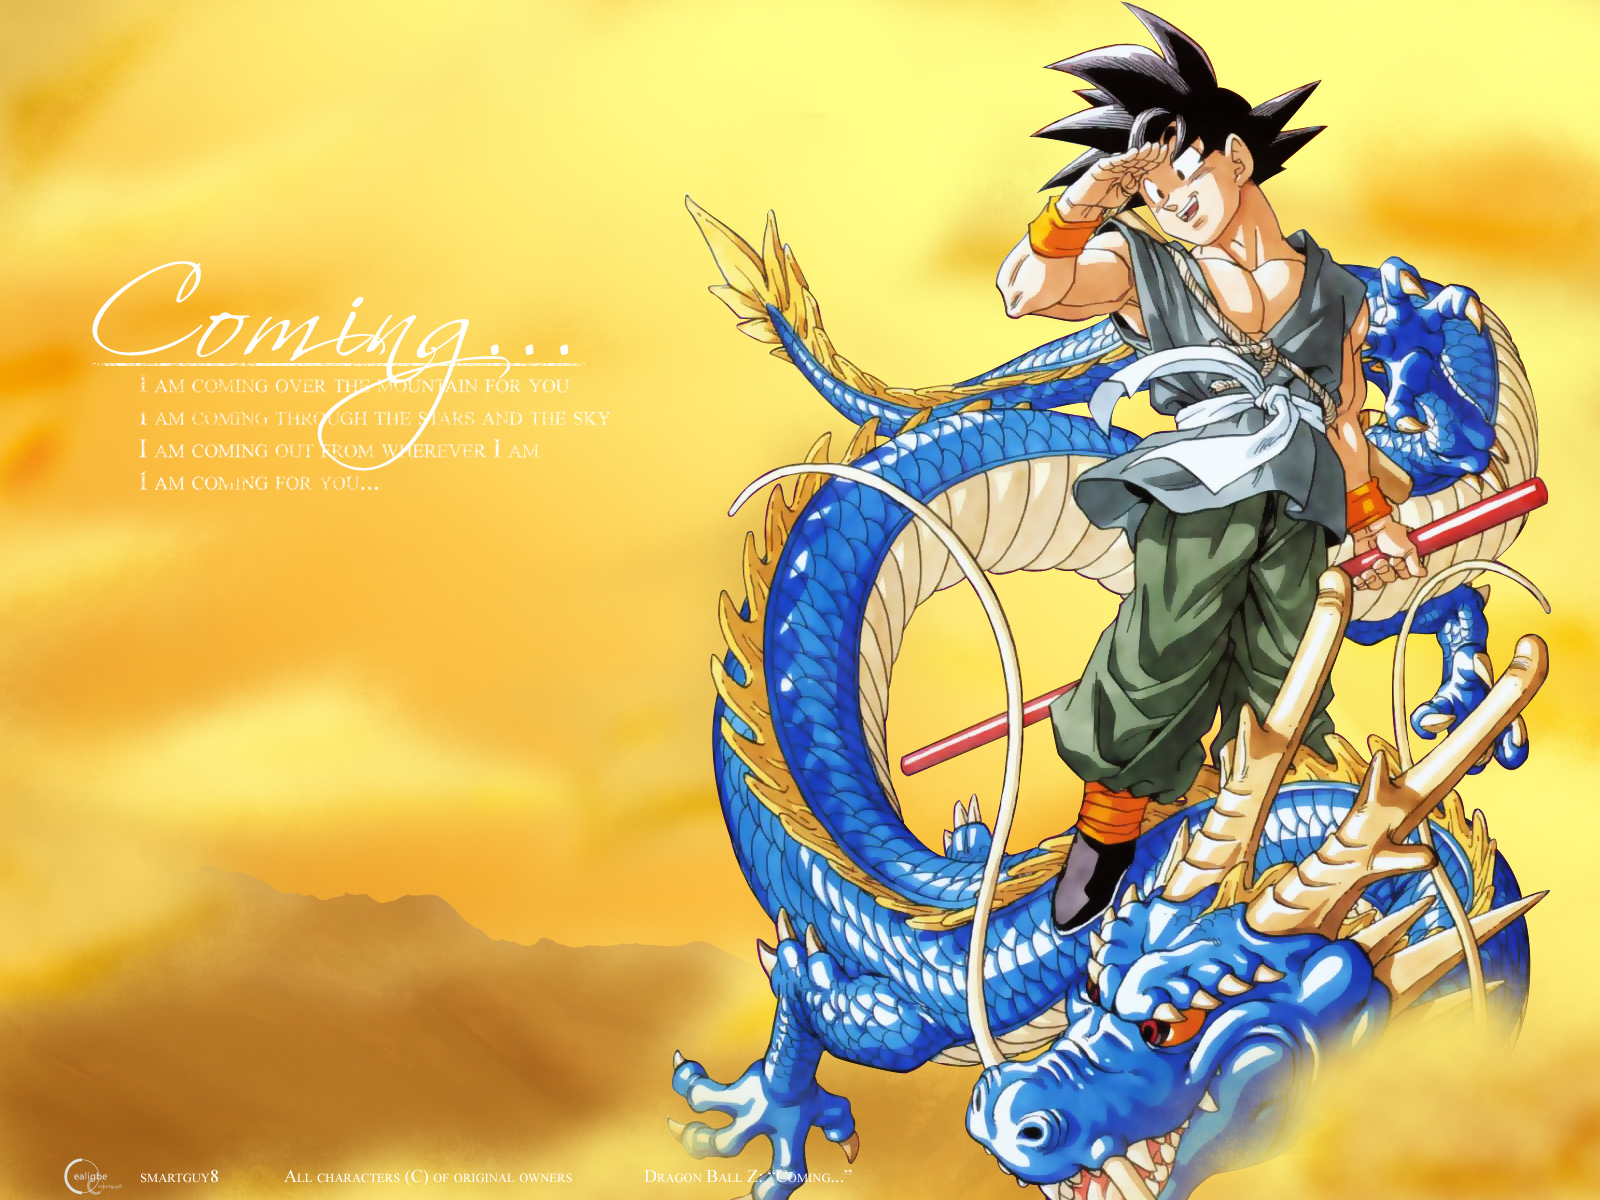 Fondos De Goku Wallpaper Universo Saiyajin El Dragon Ball